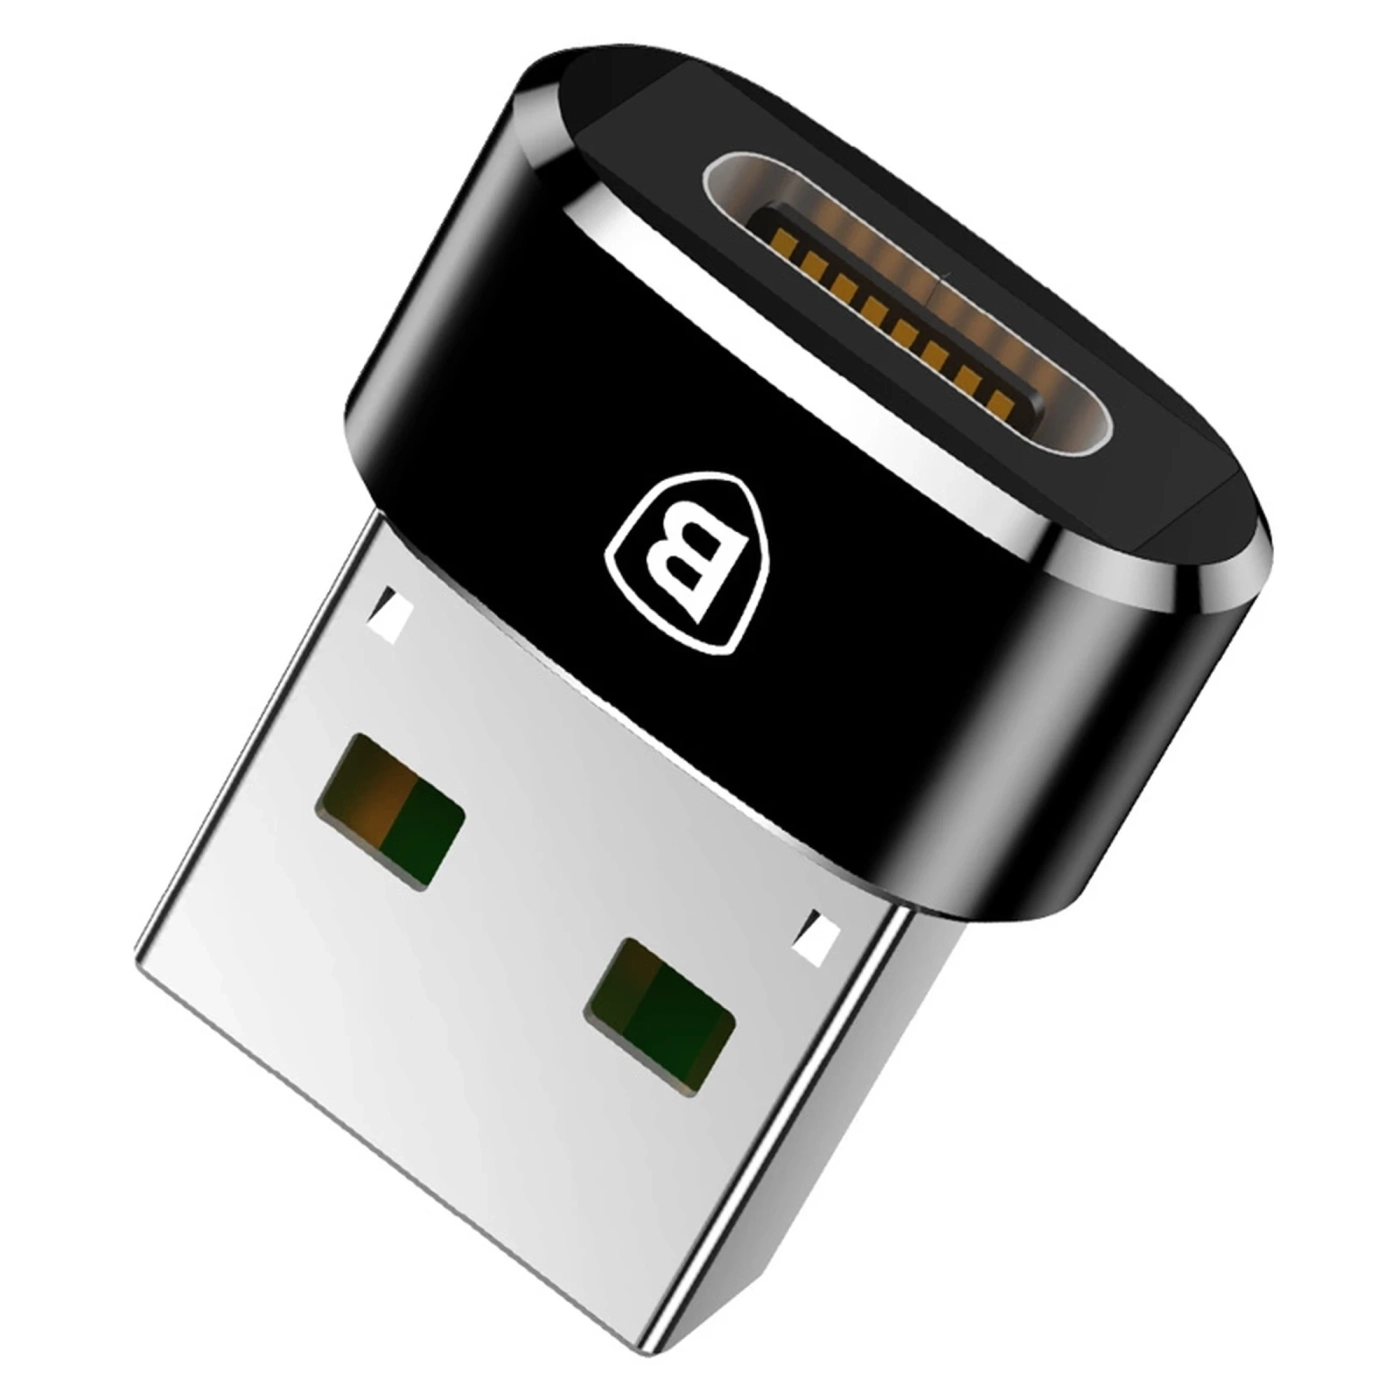 Купить Адаптер Baseus USB Male To Type-C Female Adapter Converter Black (CAAOTG-01) - фото 1